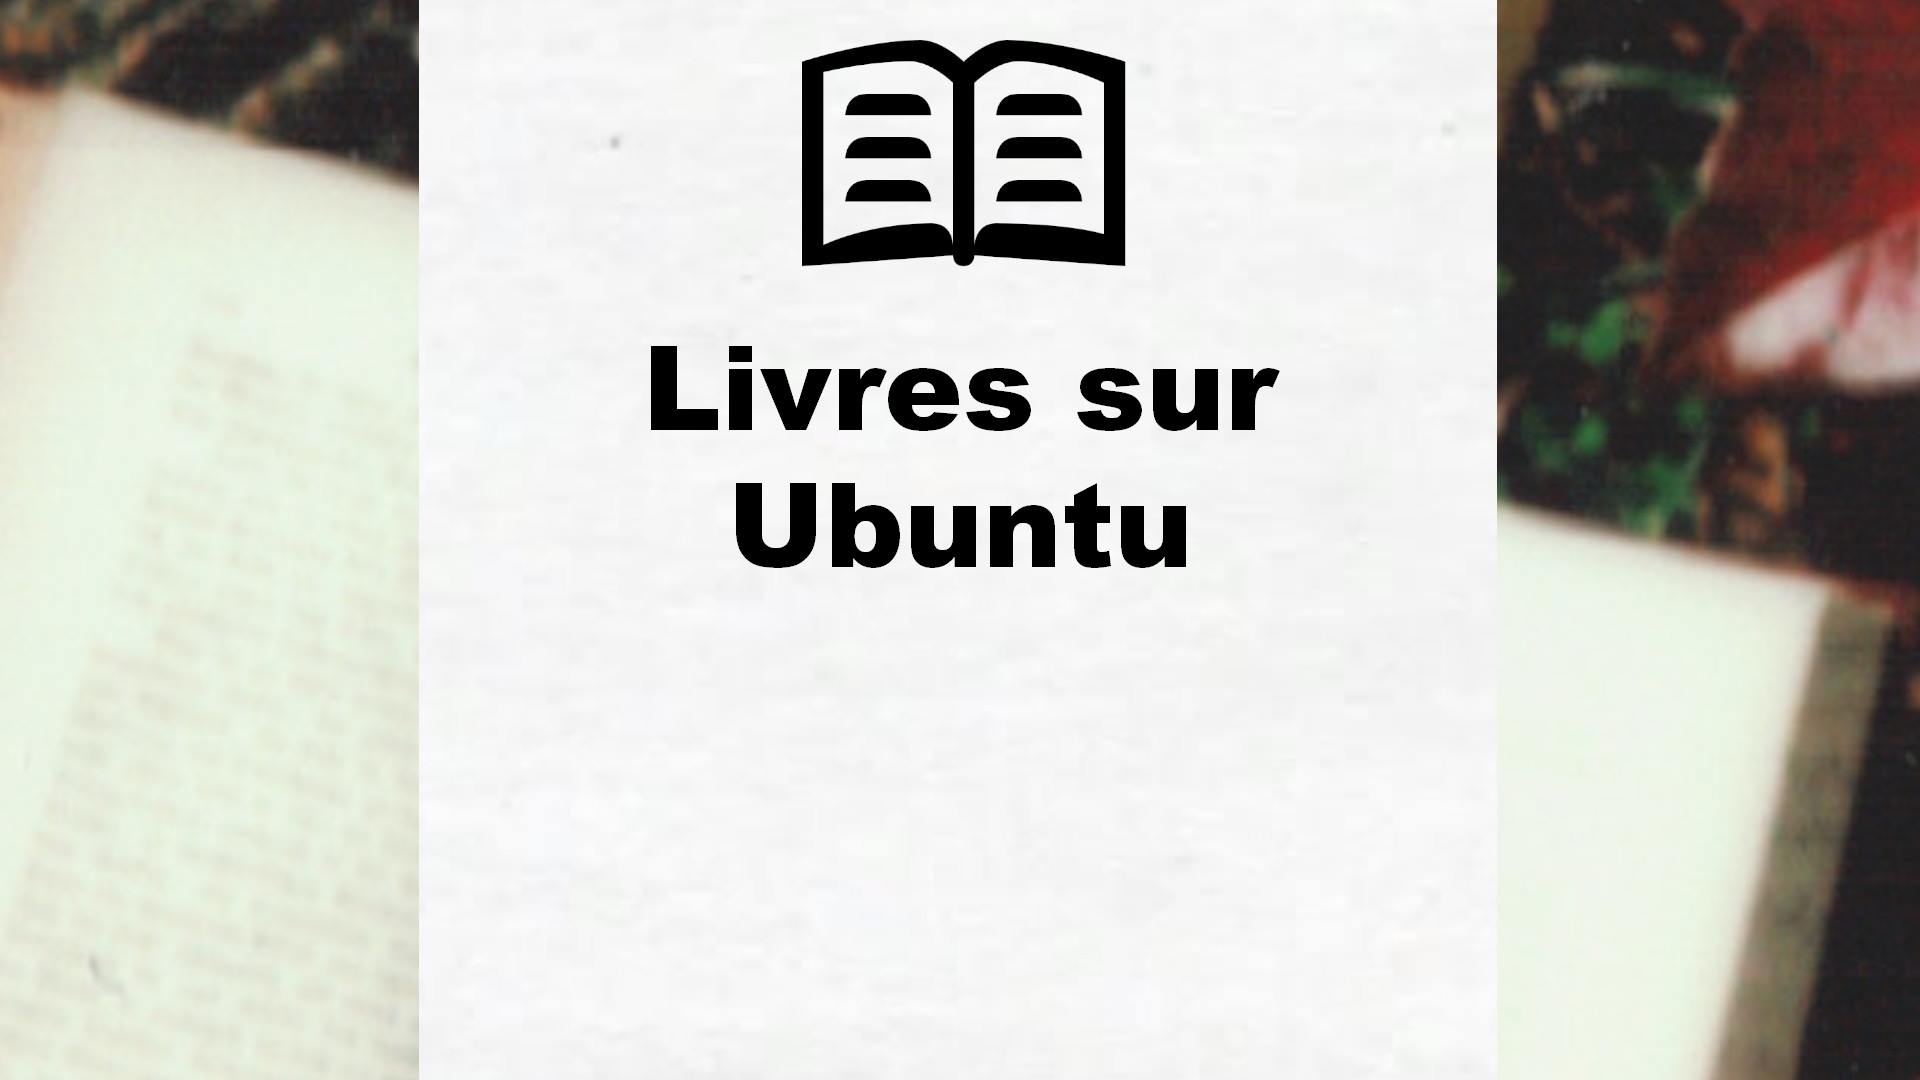 Livres sur Ubuntu